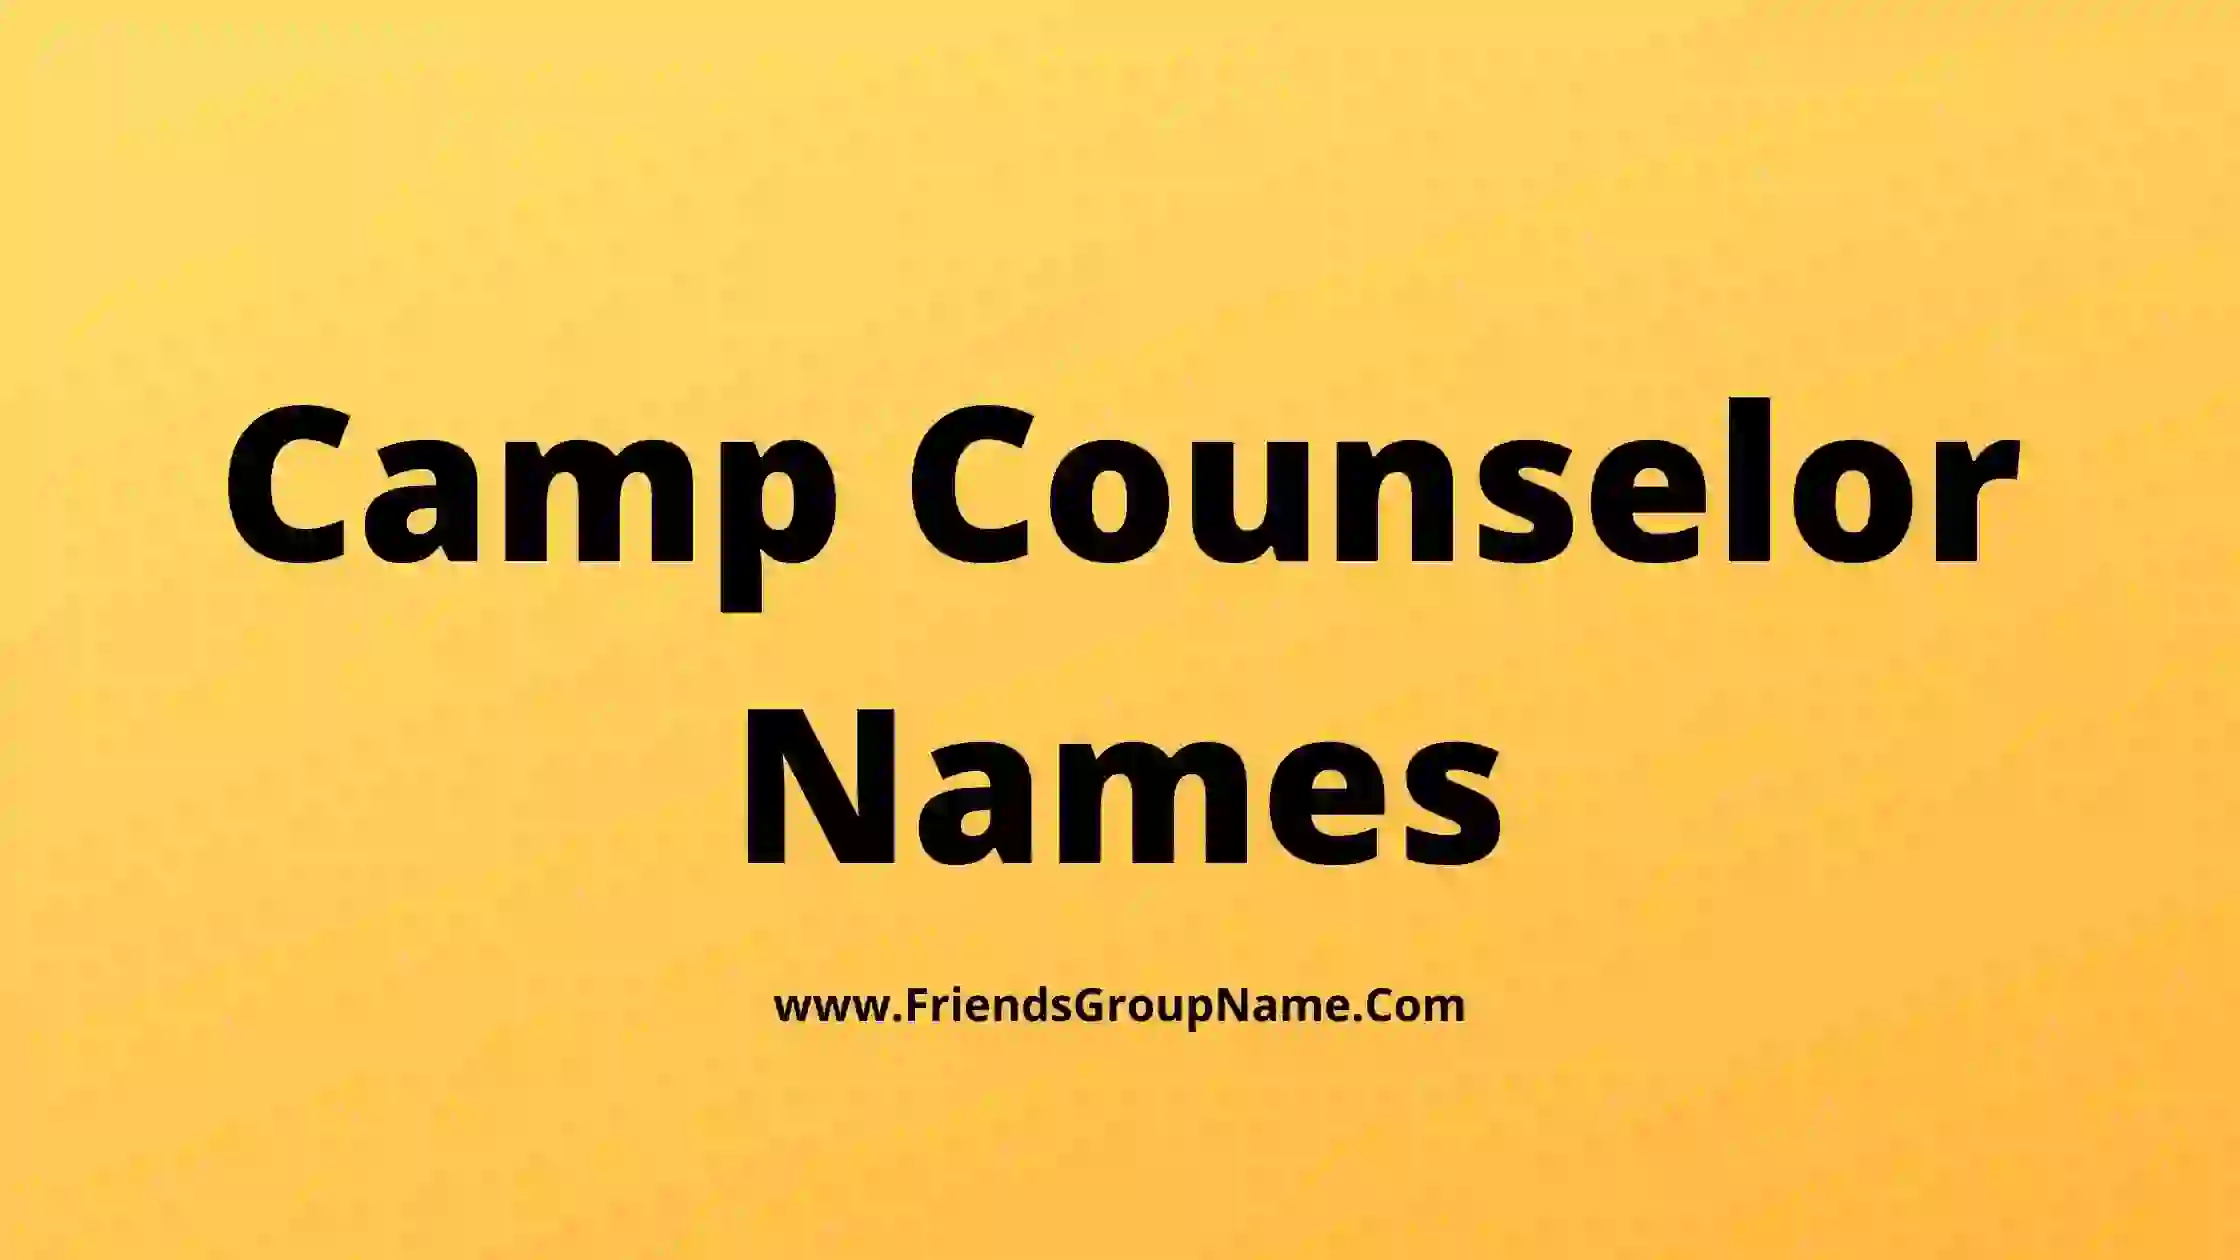 Camp Counselor Names